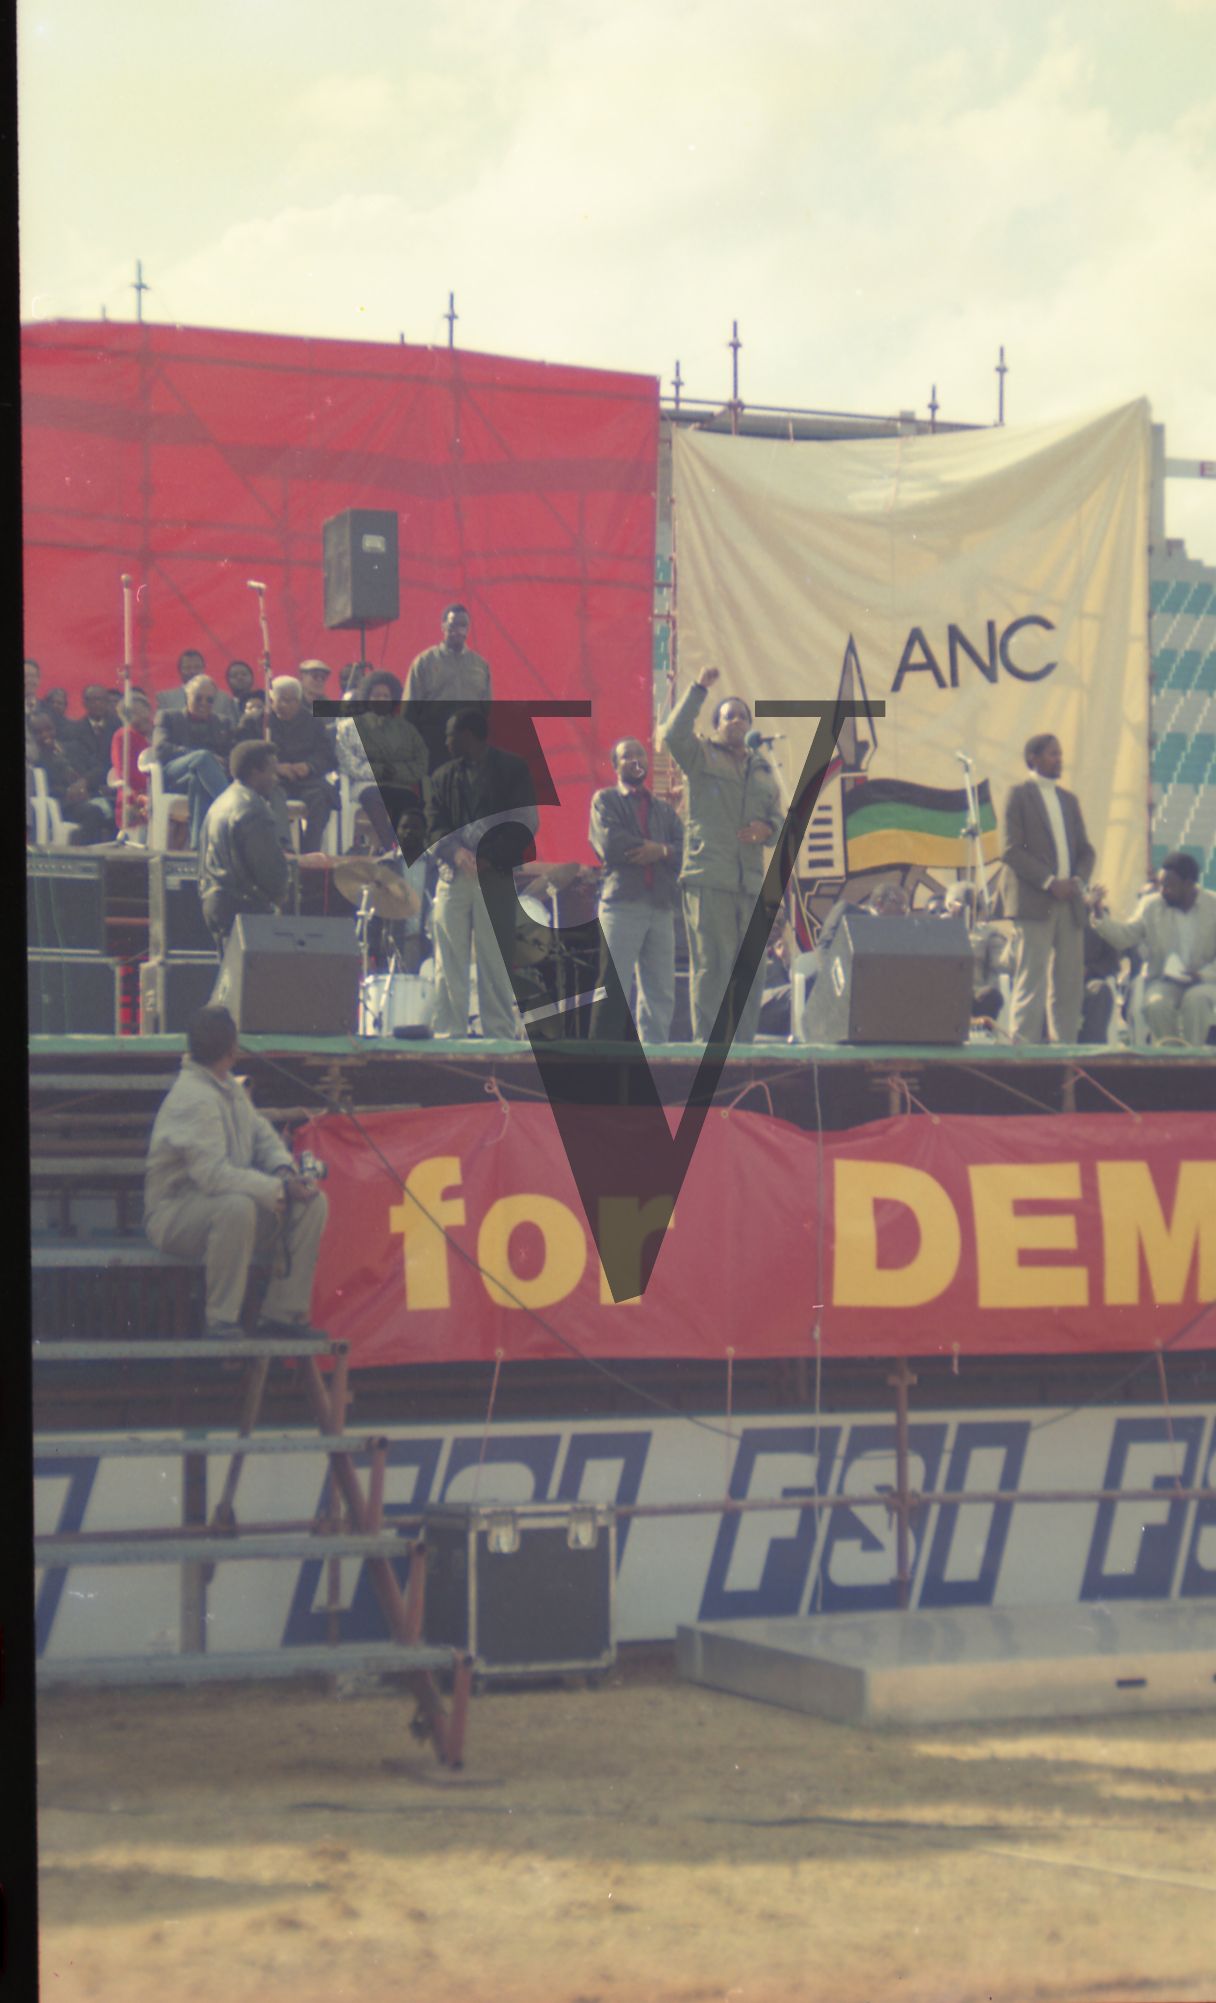 South Africa, Johannesburg, FNB Stadium, ANC rally, stage, speaker addresses crowd.